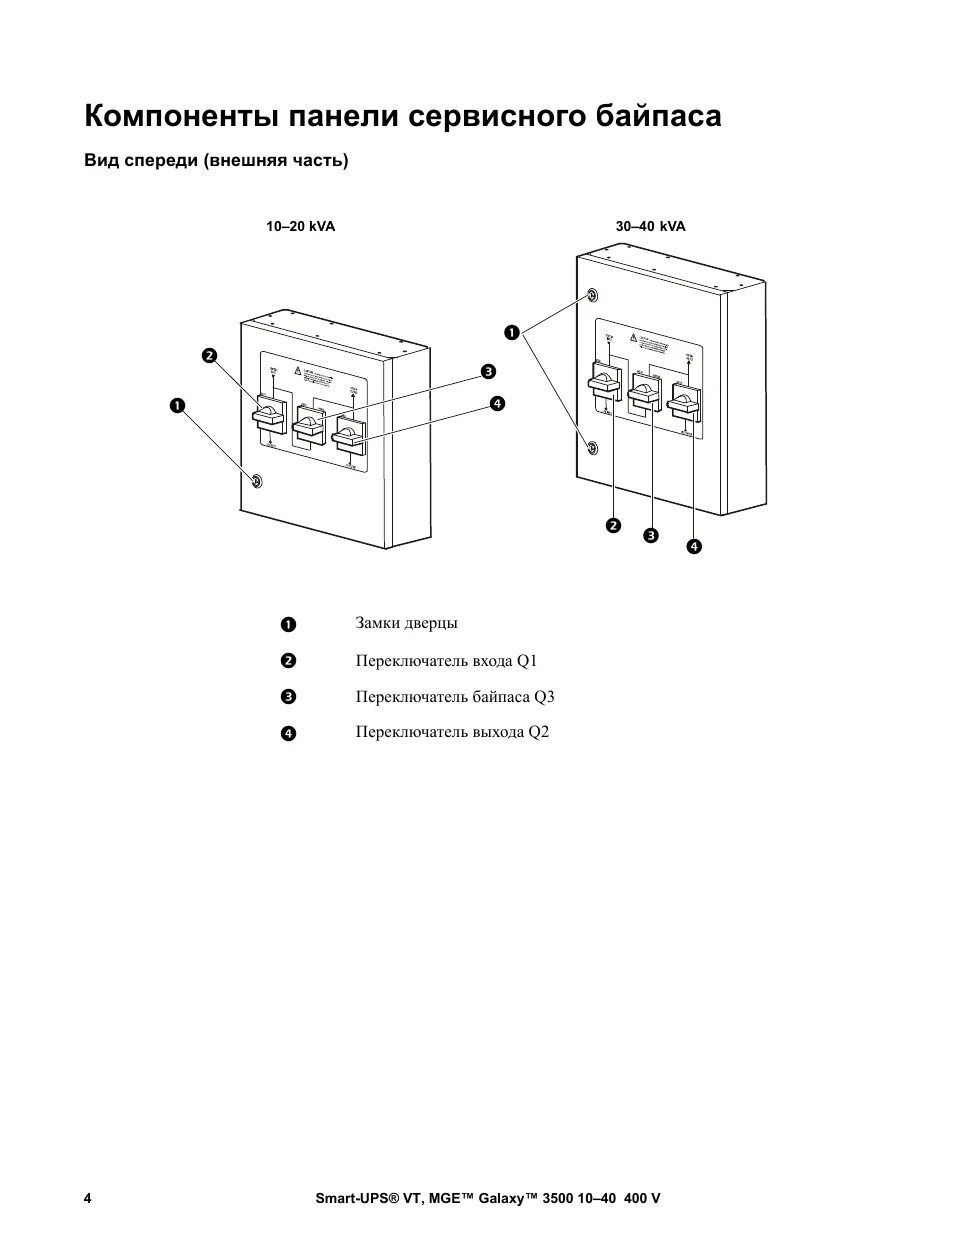 APC Galaxy 3500. Схема подключения ИБП С байпасом. Схема подключения стабилизатора напряжения с байпасом. Схема подключения ИБП через байпас.